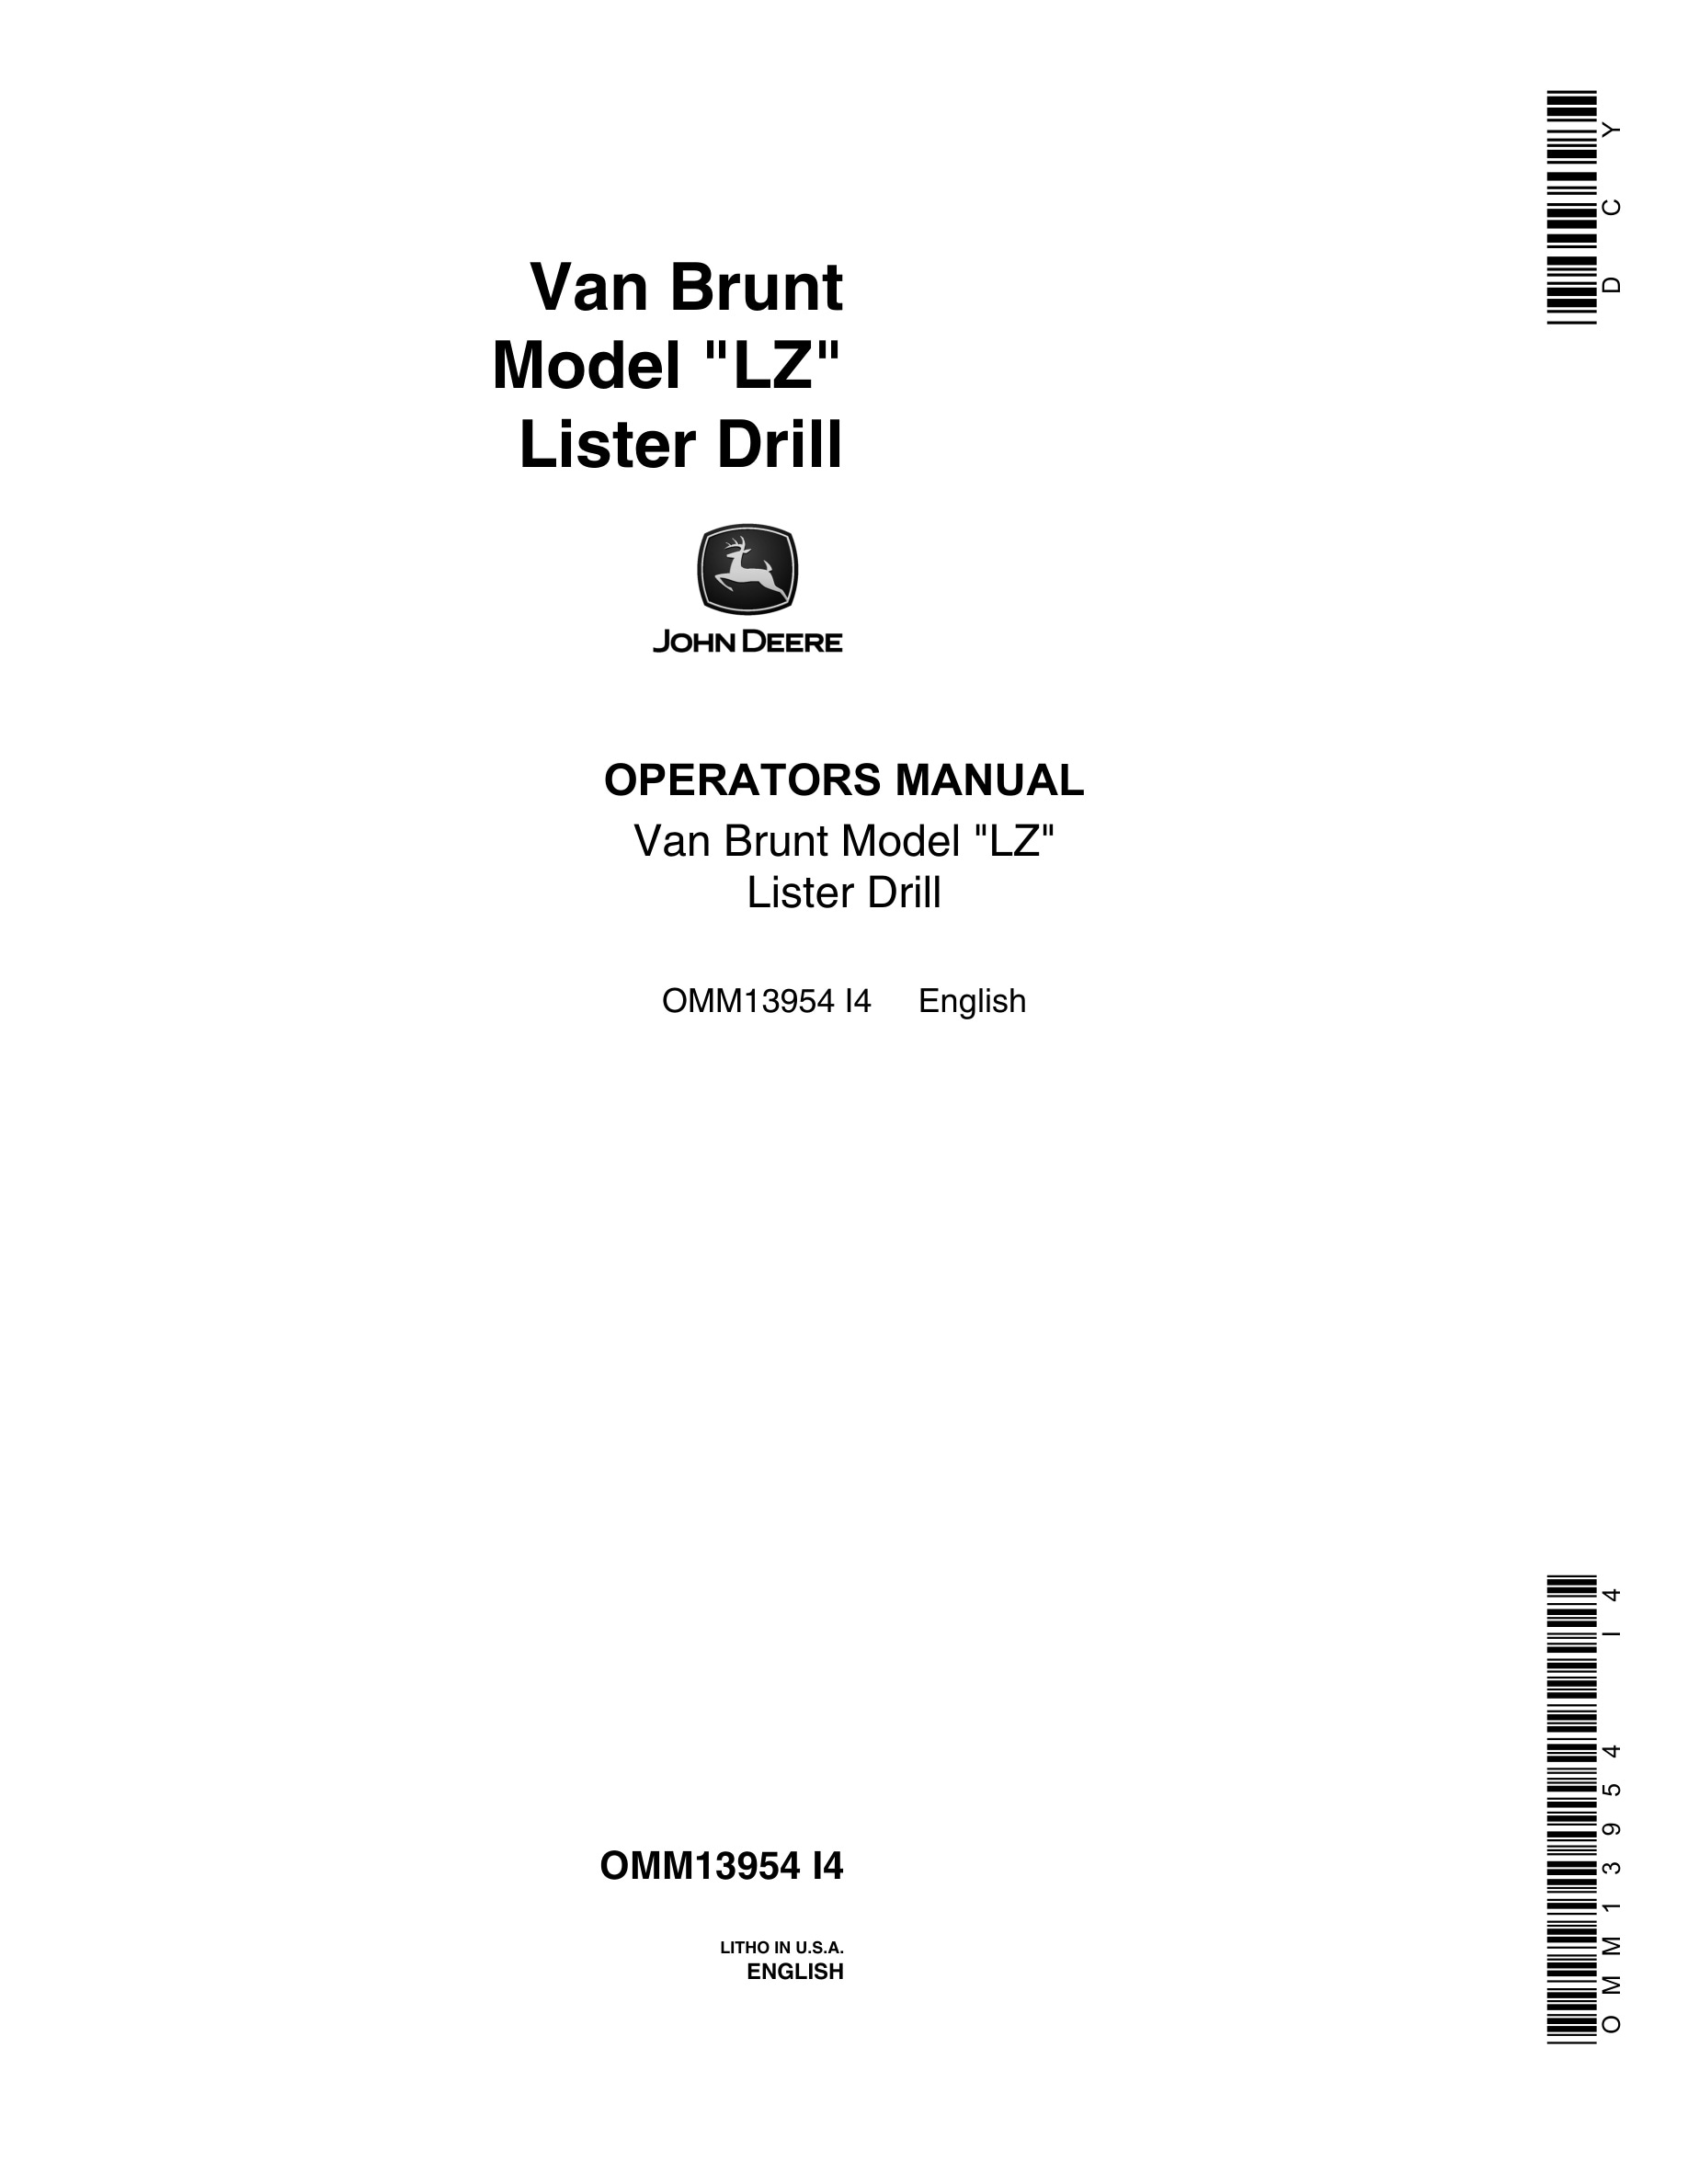 John Deere Van Brunt Model LZ Lister Drill Operator Manual OMM13954-1